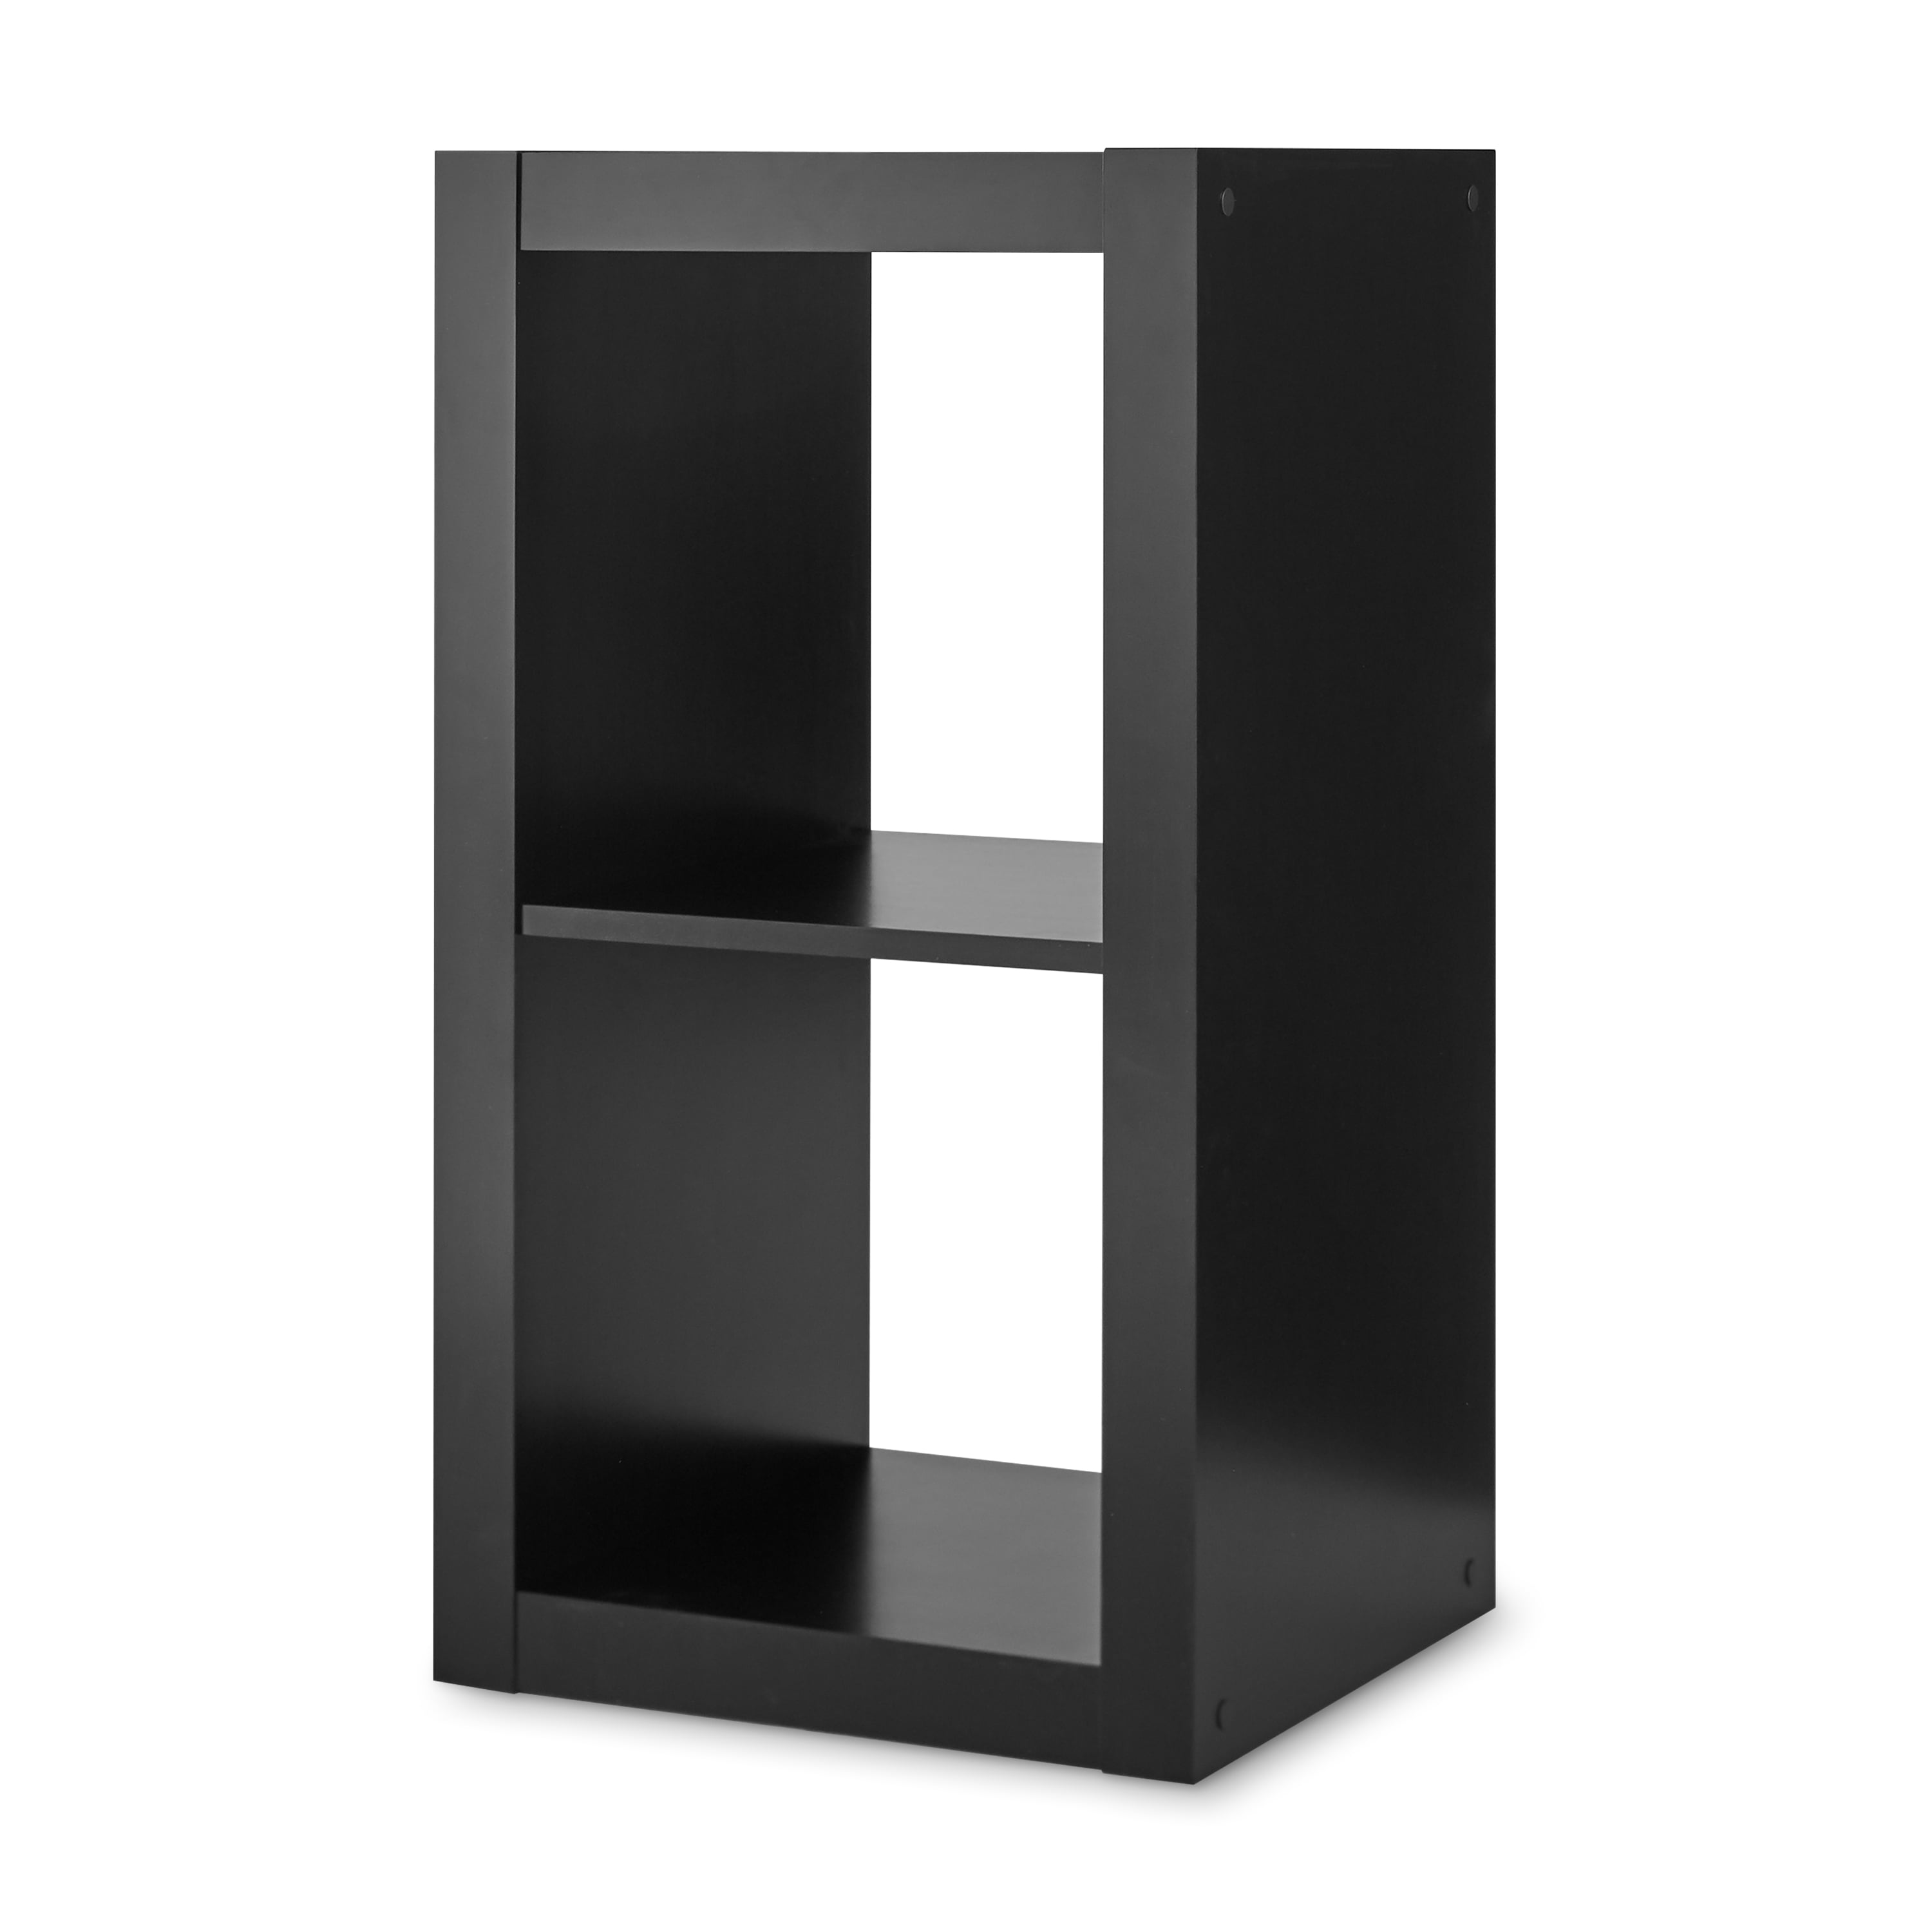 Laura James 4 6 Cube White Bookcase Wooden Display Unit Shelving Storage Bookshelf Shelves 6 Cube, White